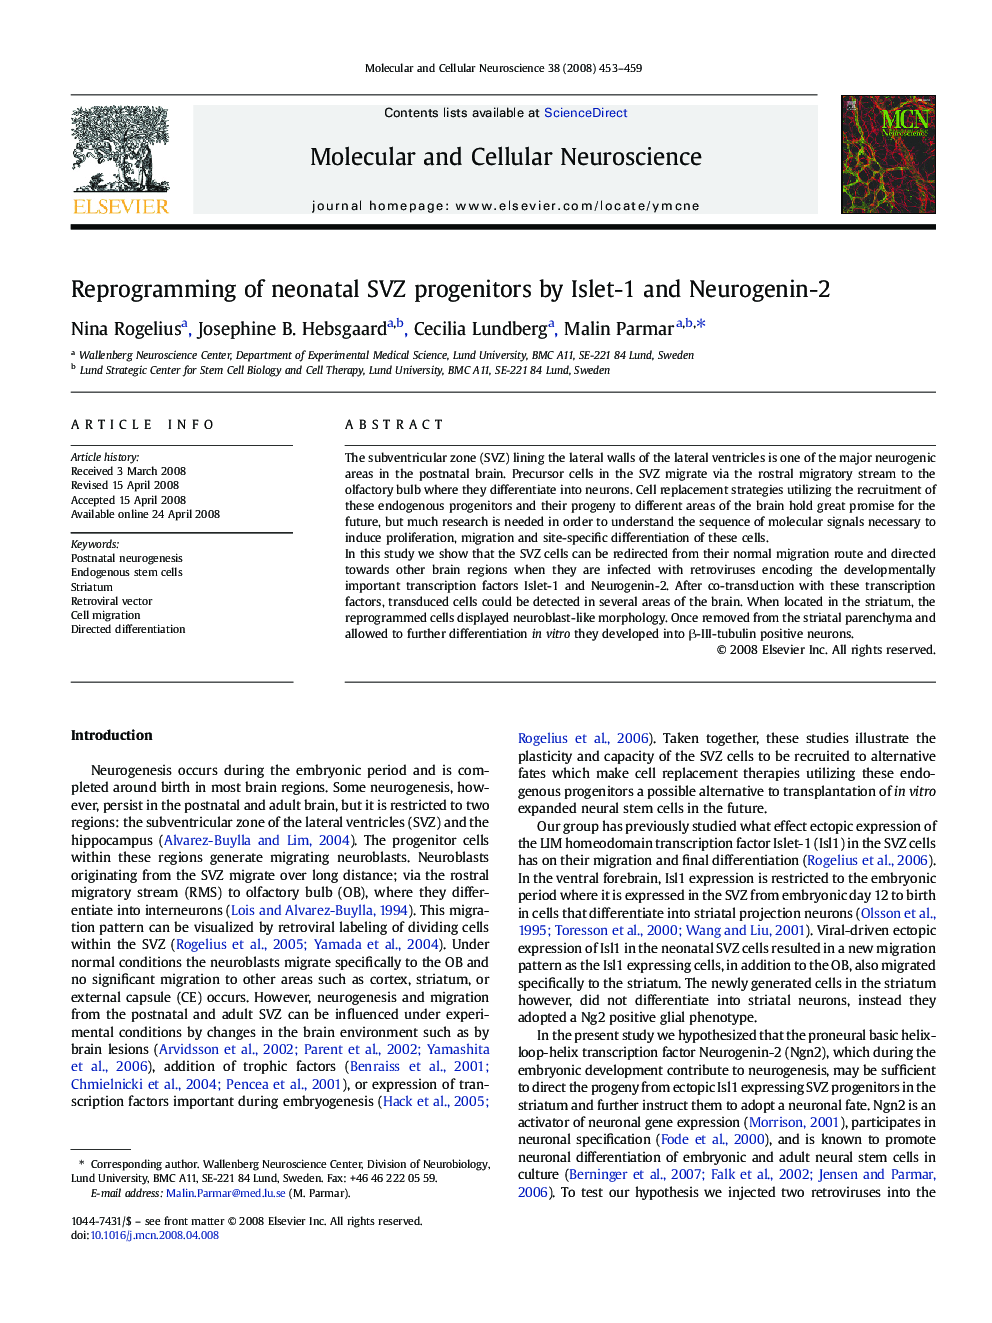 Reprogramming of neonatal SVZ progenitors by Islet-1 and Neurogenin-2